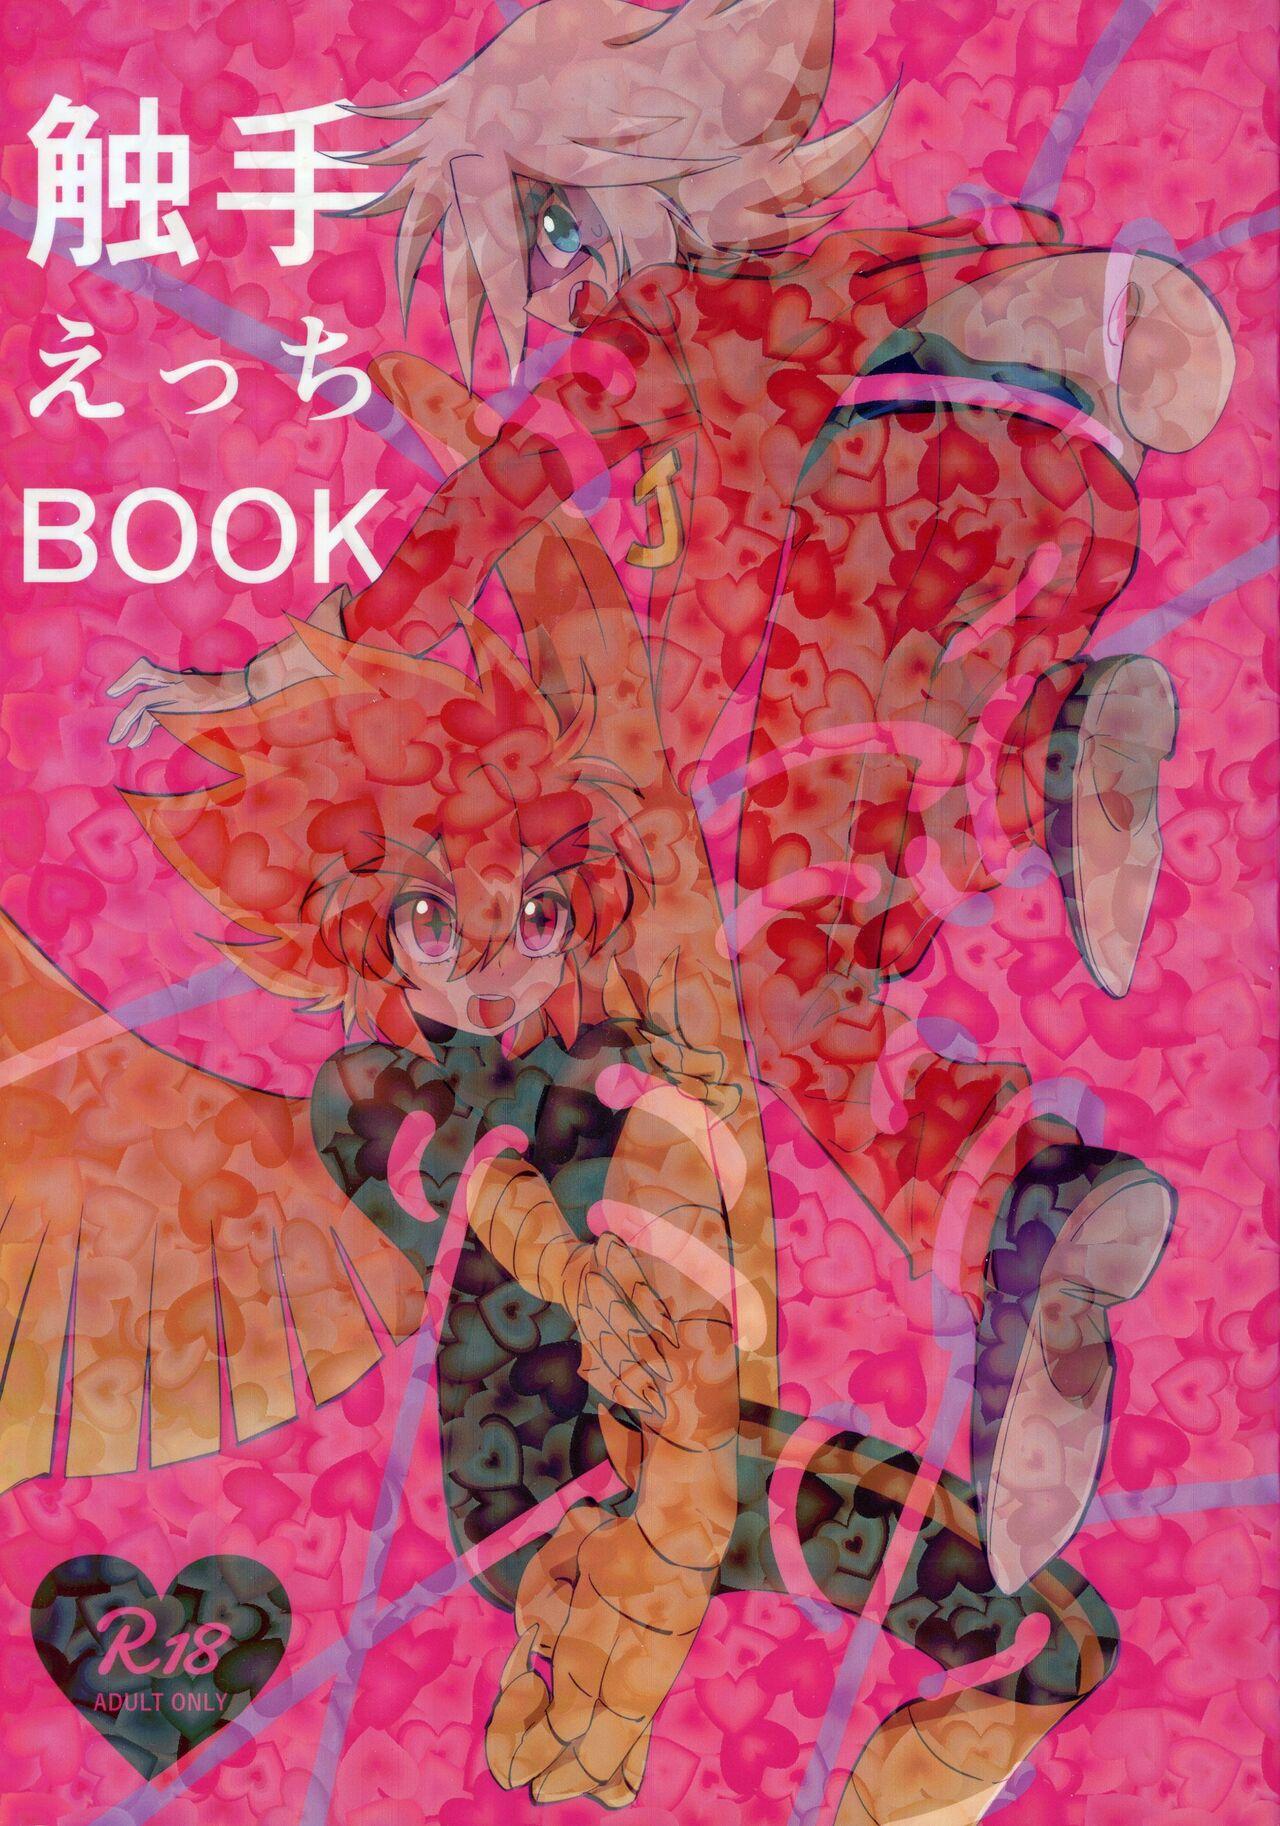 Swingers Shokushu Ecchi BOOK - Kaitou joker This - Picture 1